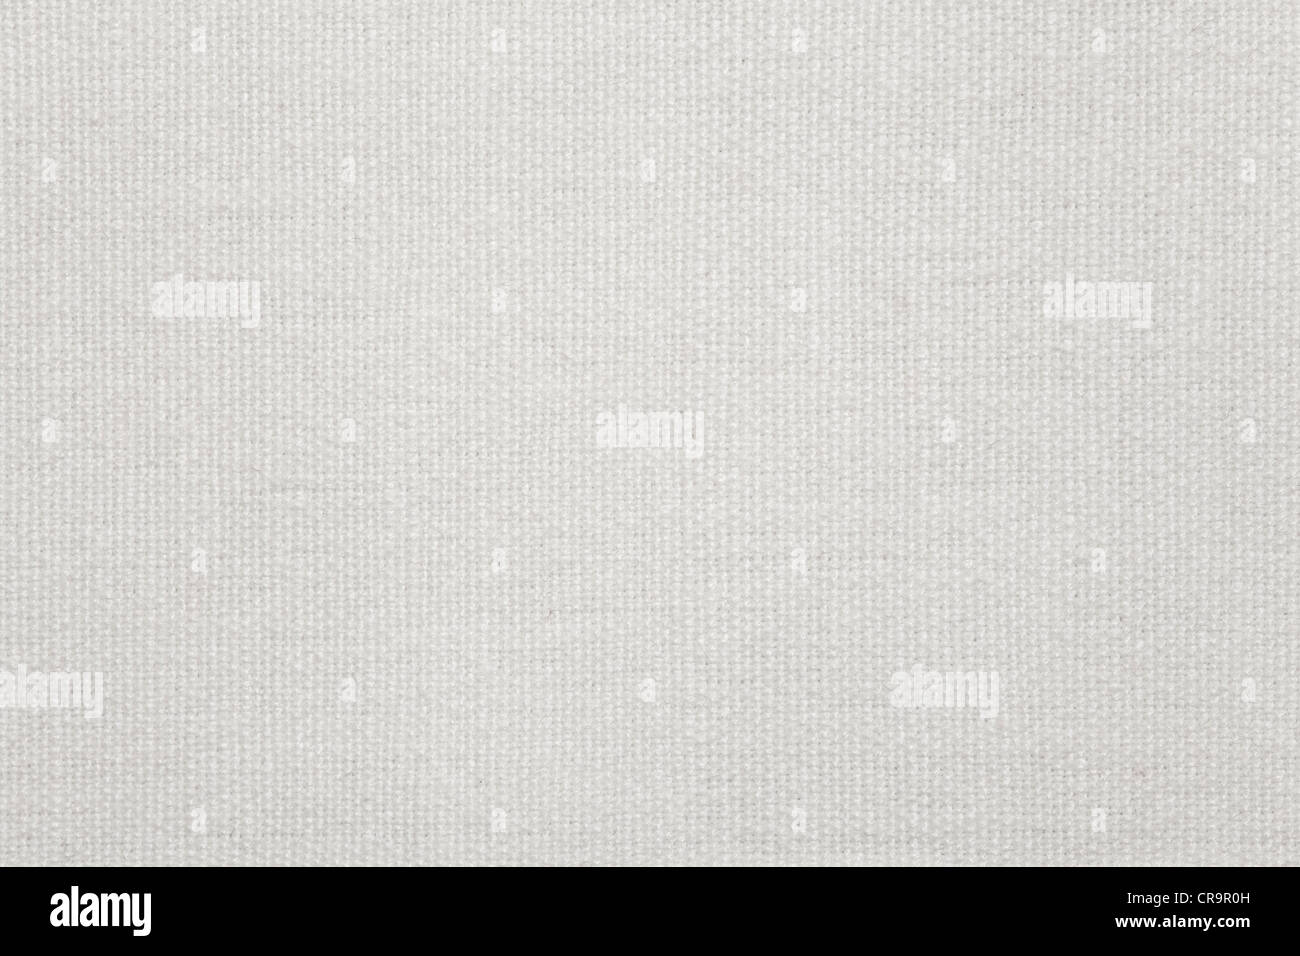 white cotton horizontal background, fabric cotton material Stock Photo